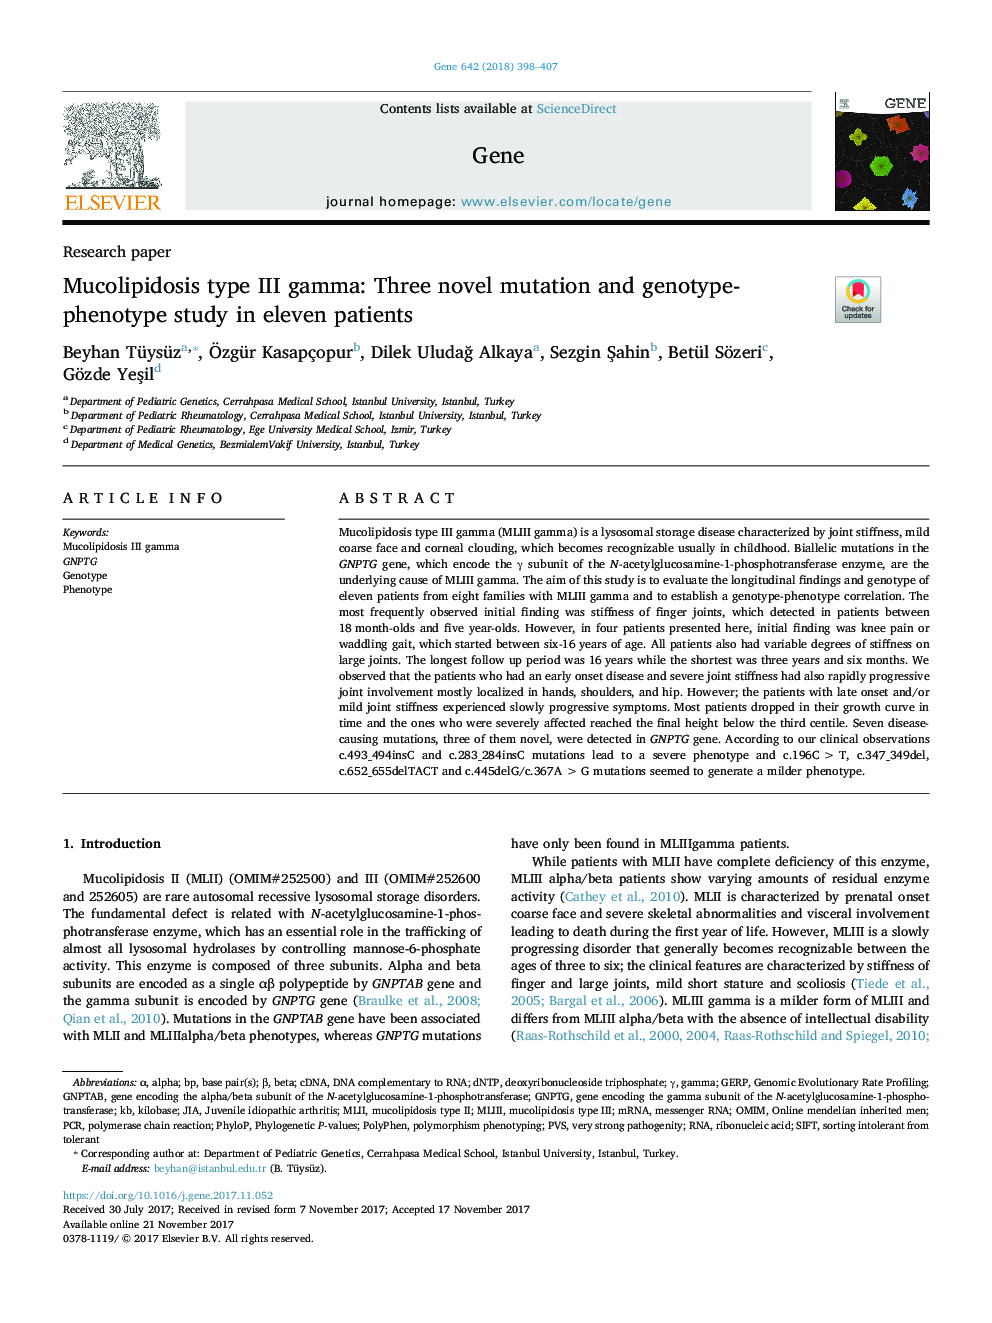 Mucolipidosis type III gamma: Three novel mutation and genotype-phenotype study in eleven patients